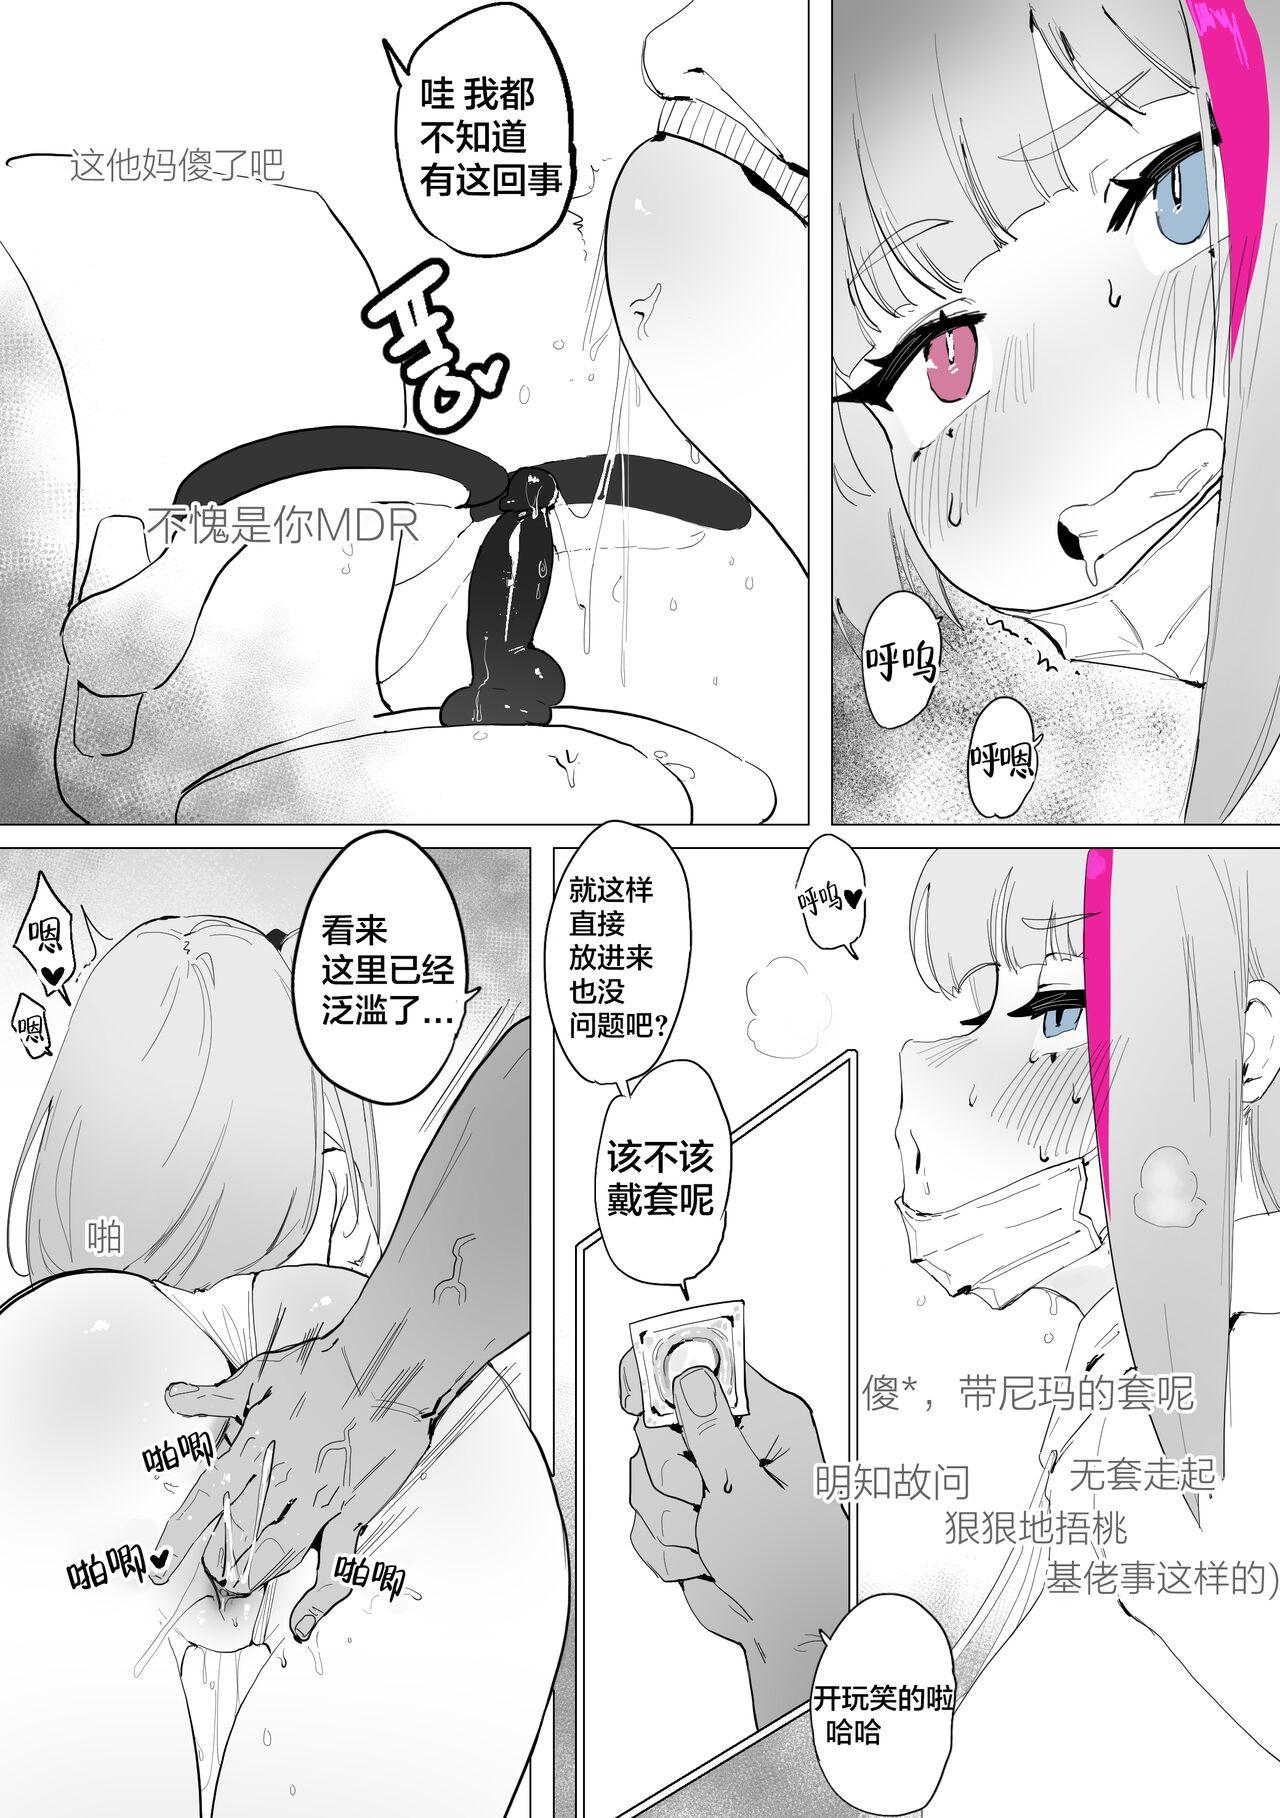 Stepbro MDR Manga - Girls frontline Gemendo - Page 5